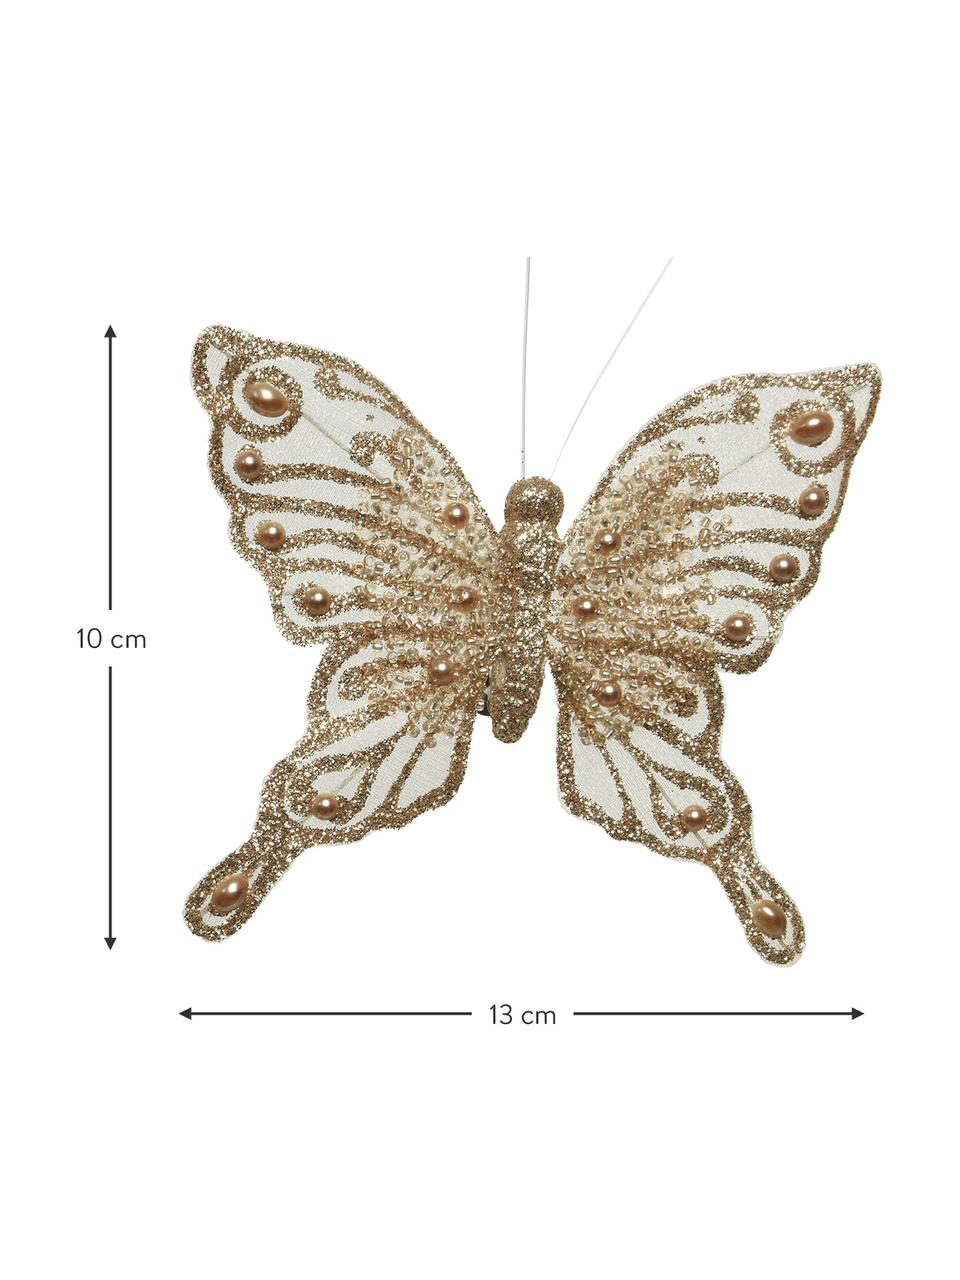 Závěsné dekorace Butterflies, 3 ks, Umělá hmota, Zlatá, bílá, Sada s různými velikostmi